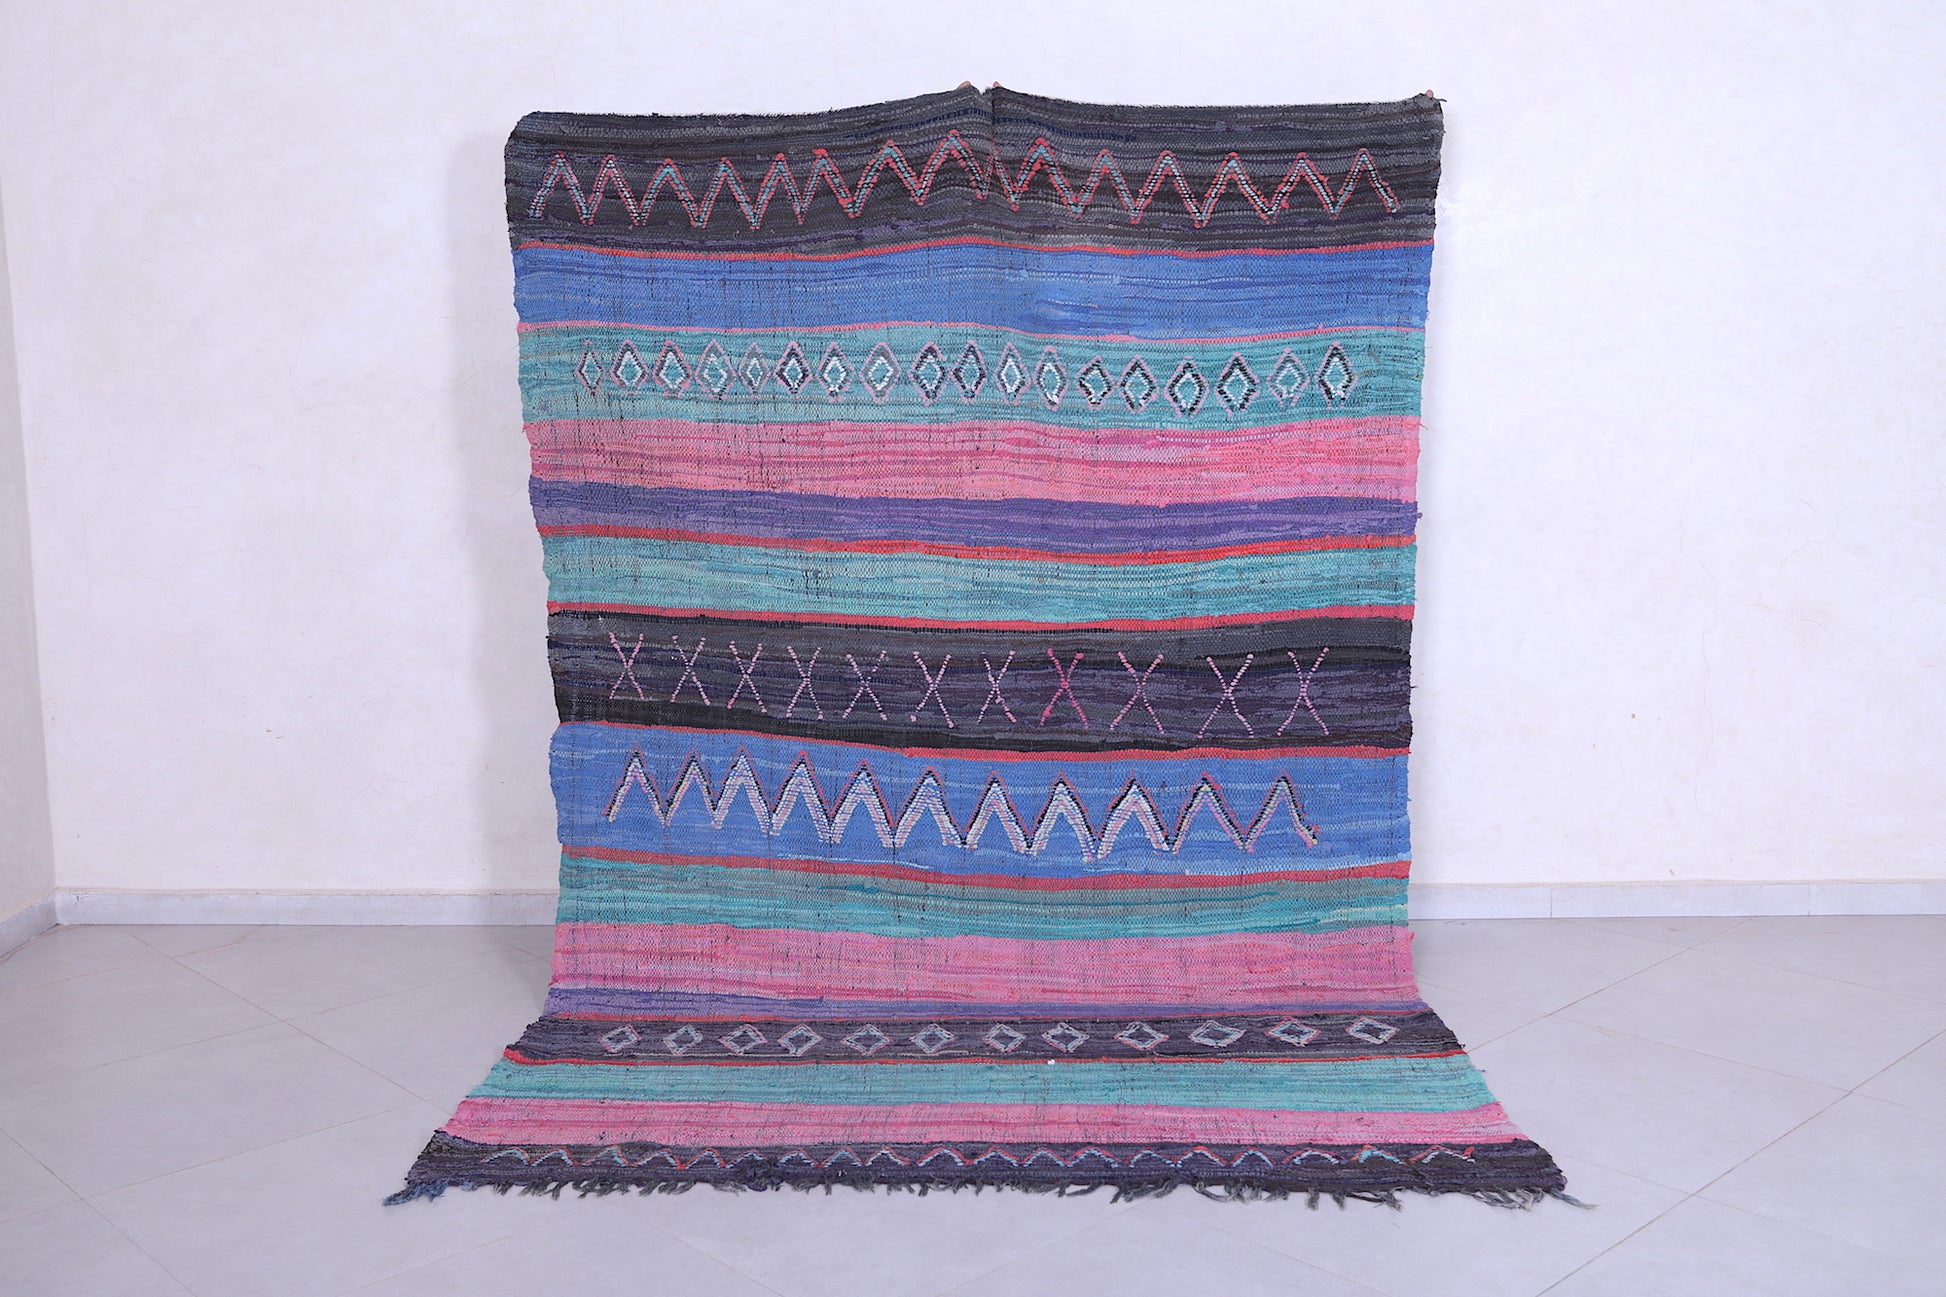 Colorful Flat woven Moroccan Kilim 5.9 X 8.8 Feet